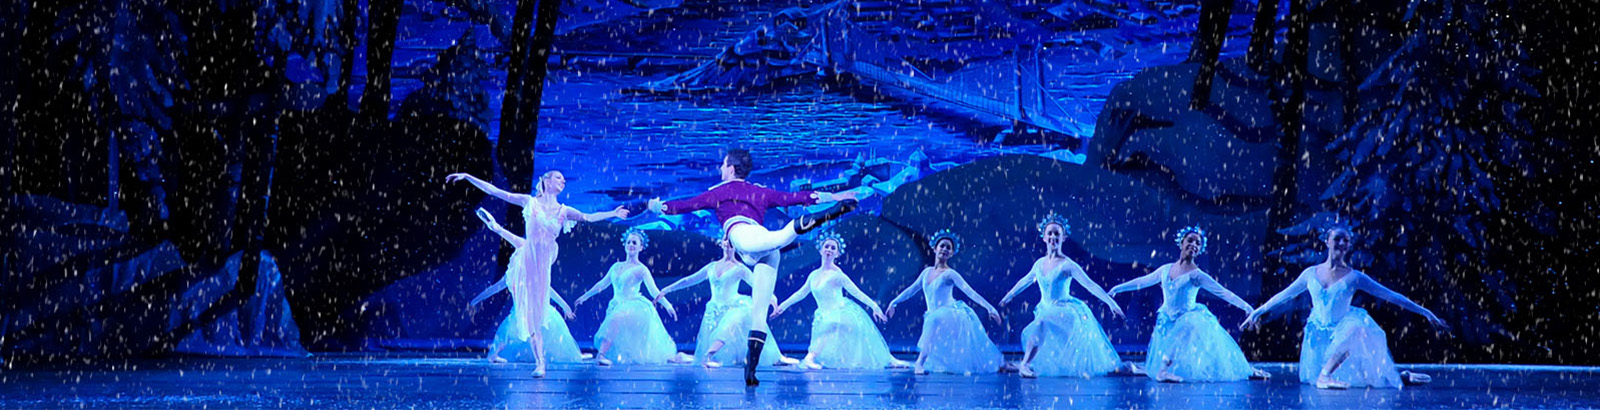 Snow Scene - Pittsburgh Ballet Theatre's The Nutcracker